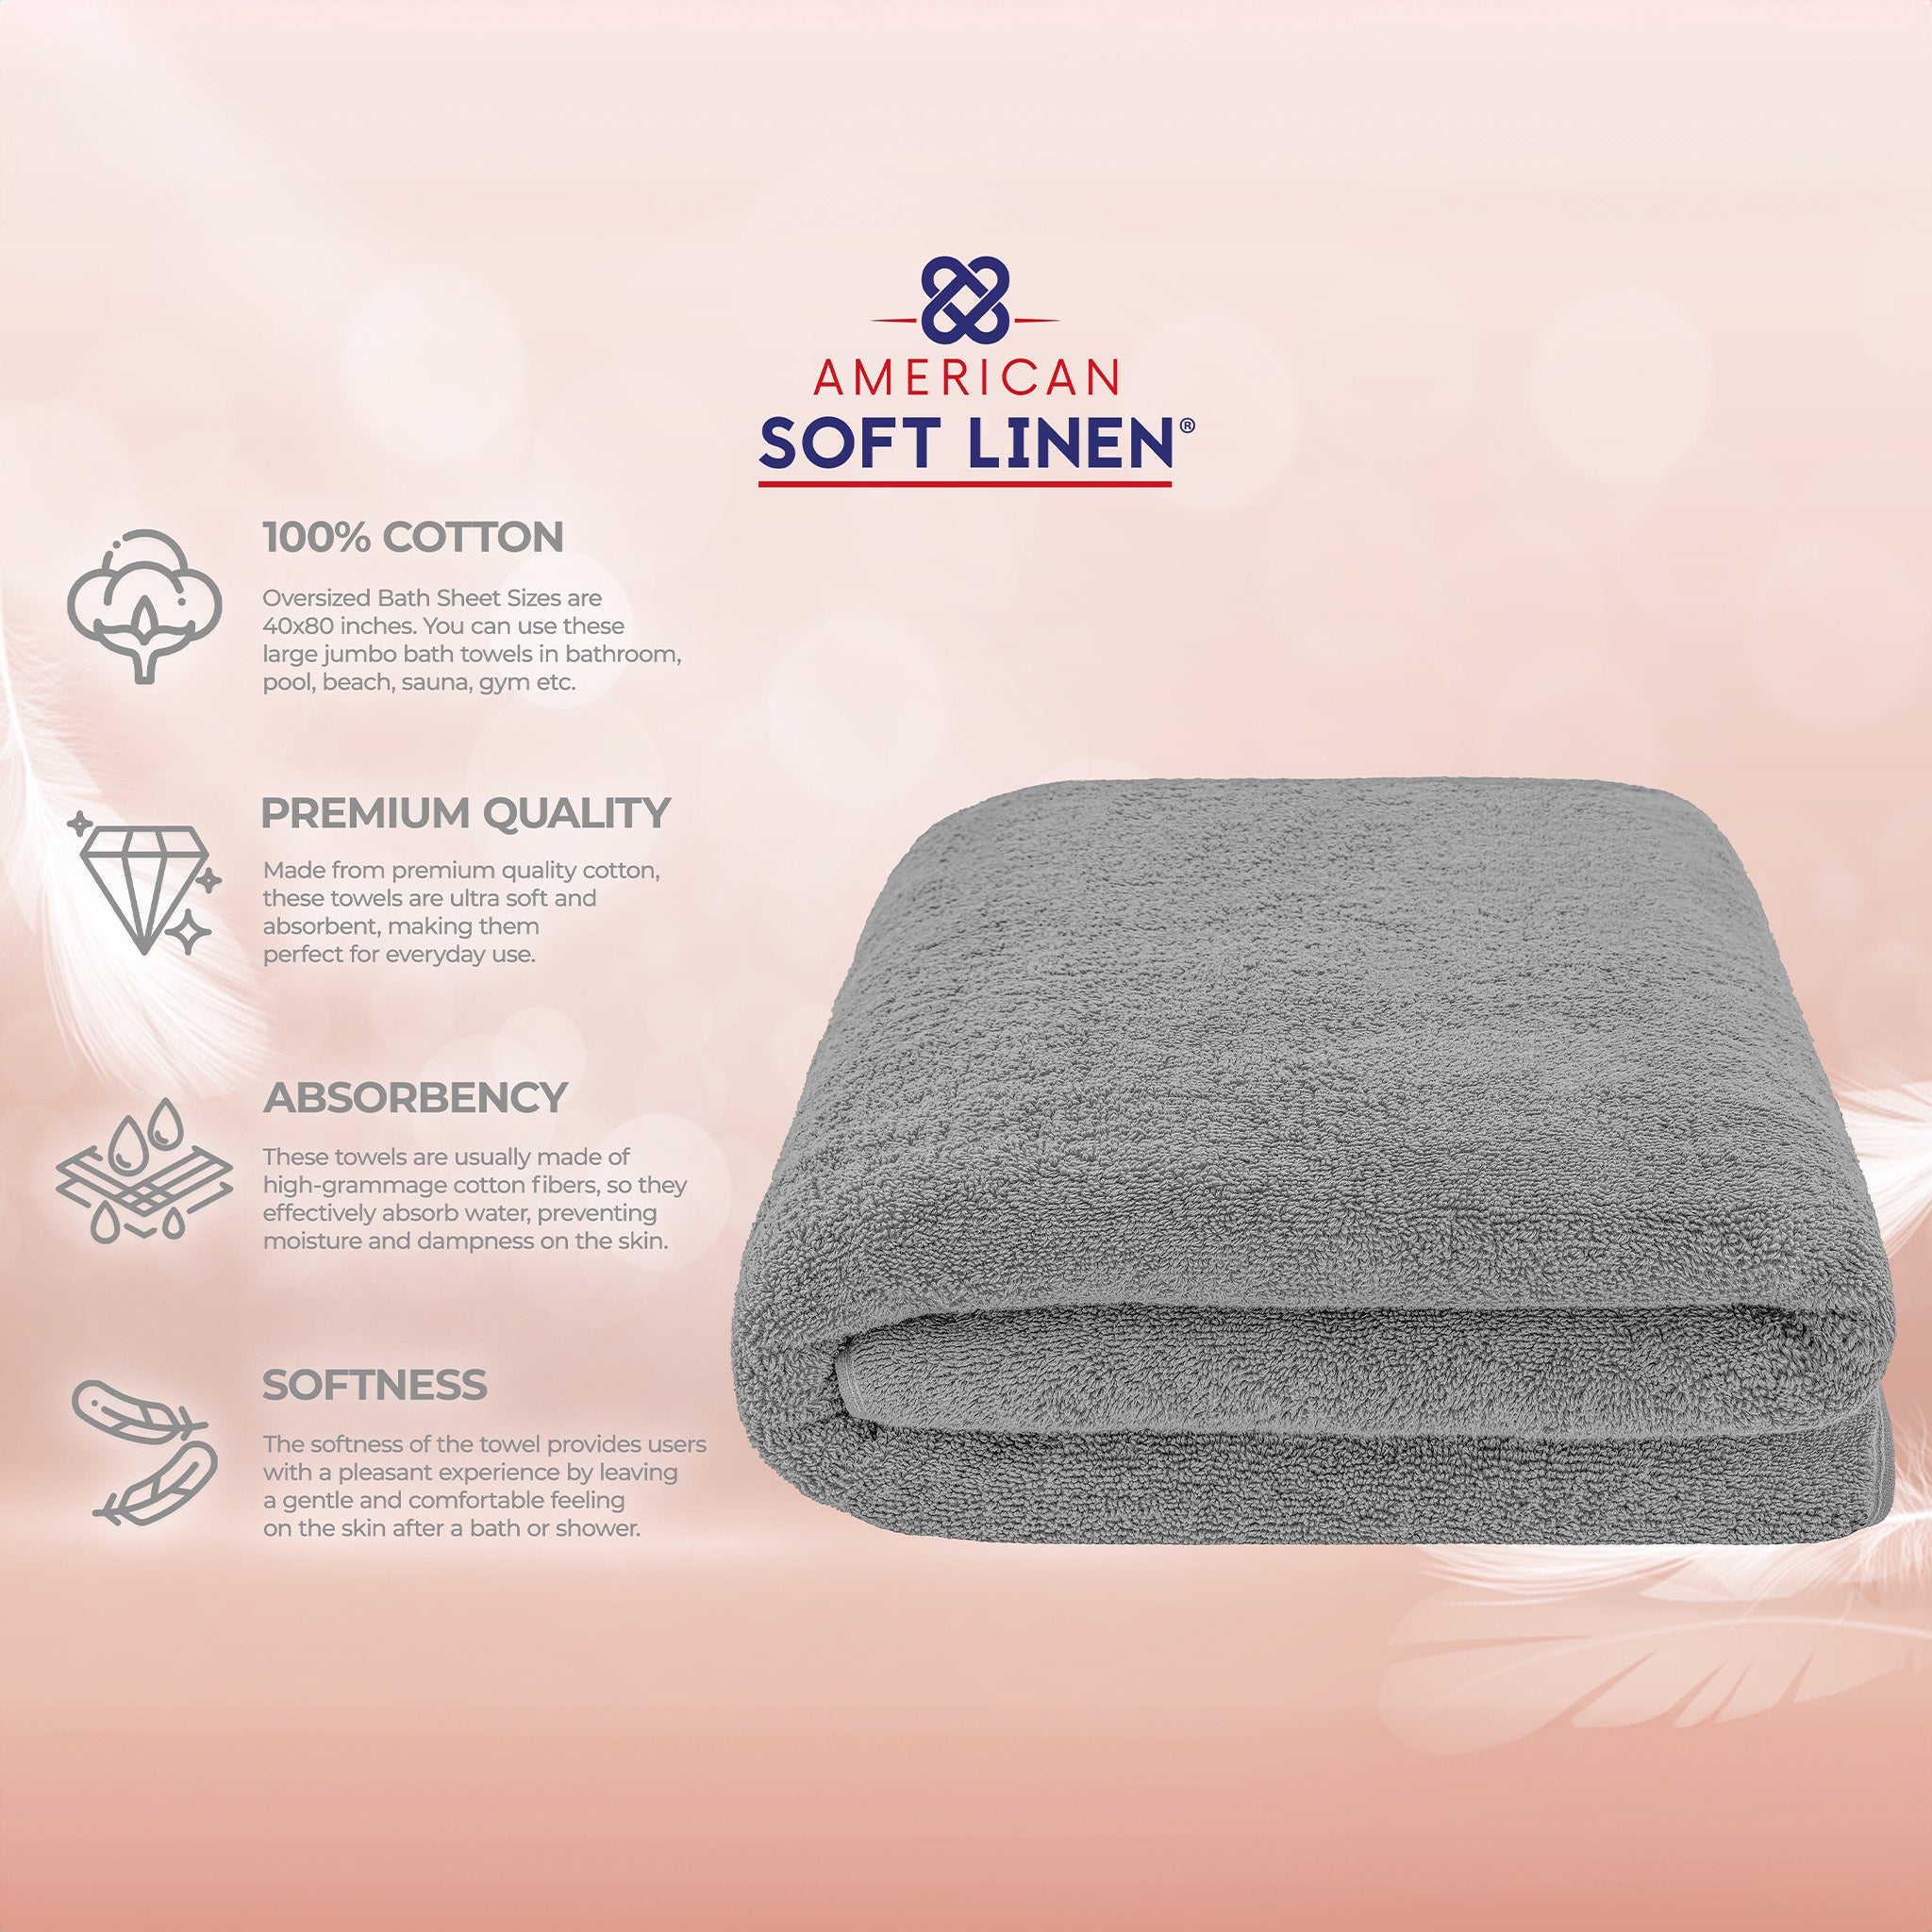 American Soft Linen Oversized 40x80 Jumbo Large Bath Towels for Bathroom,  100% Ringspun Cotton Bath Sheet for Adults, Light Grey